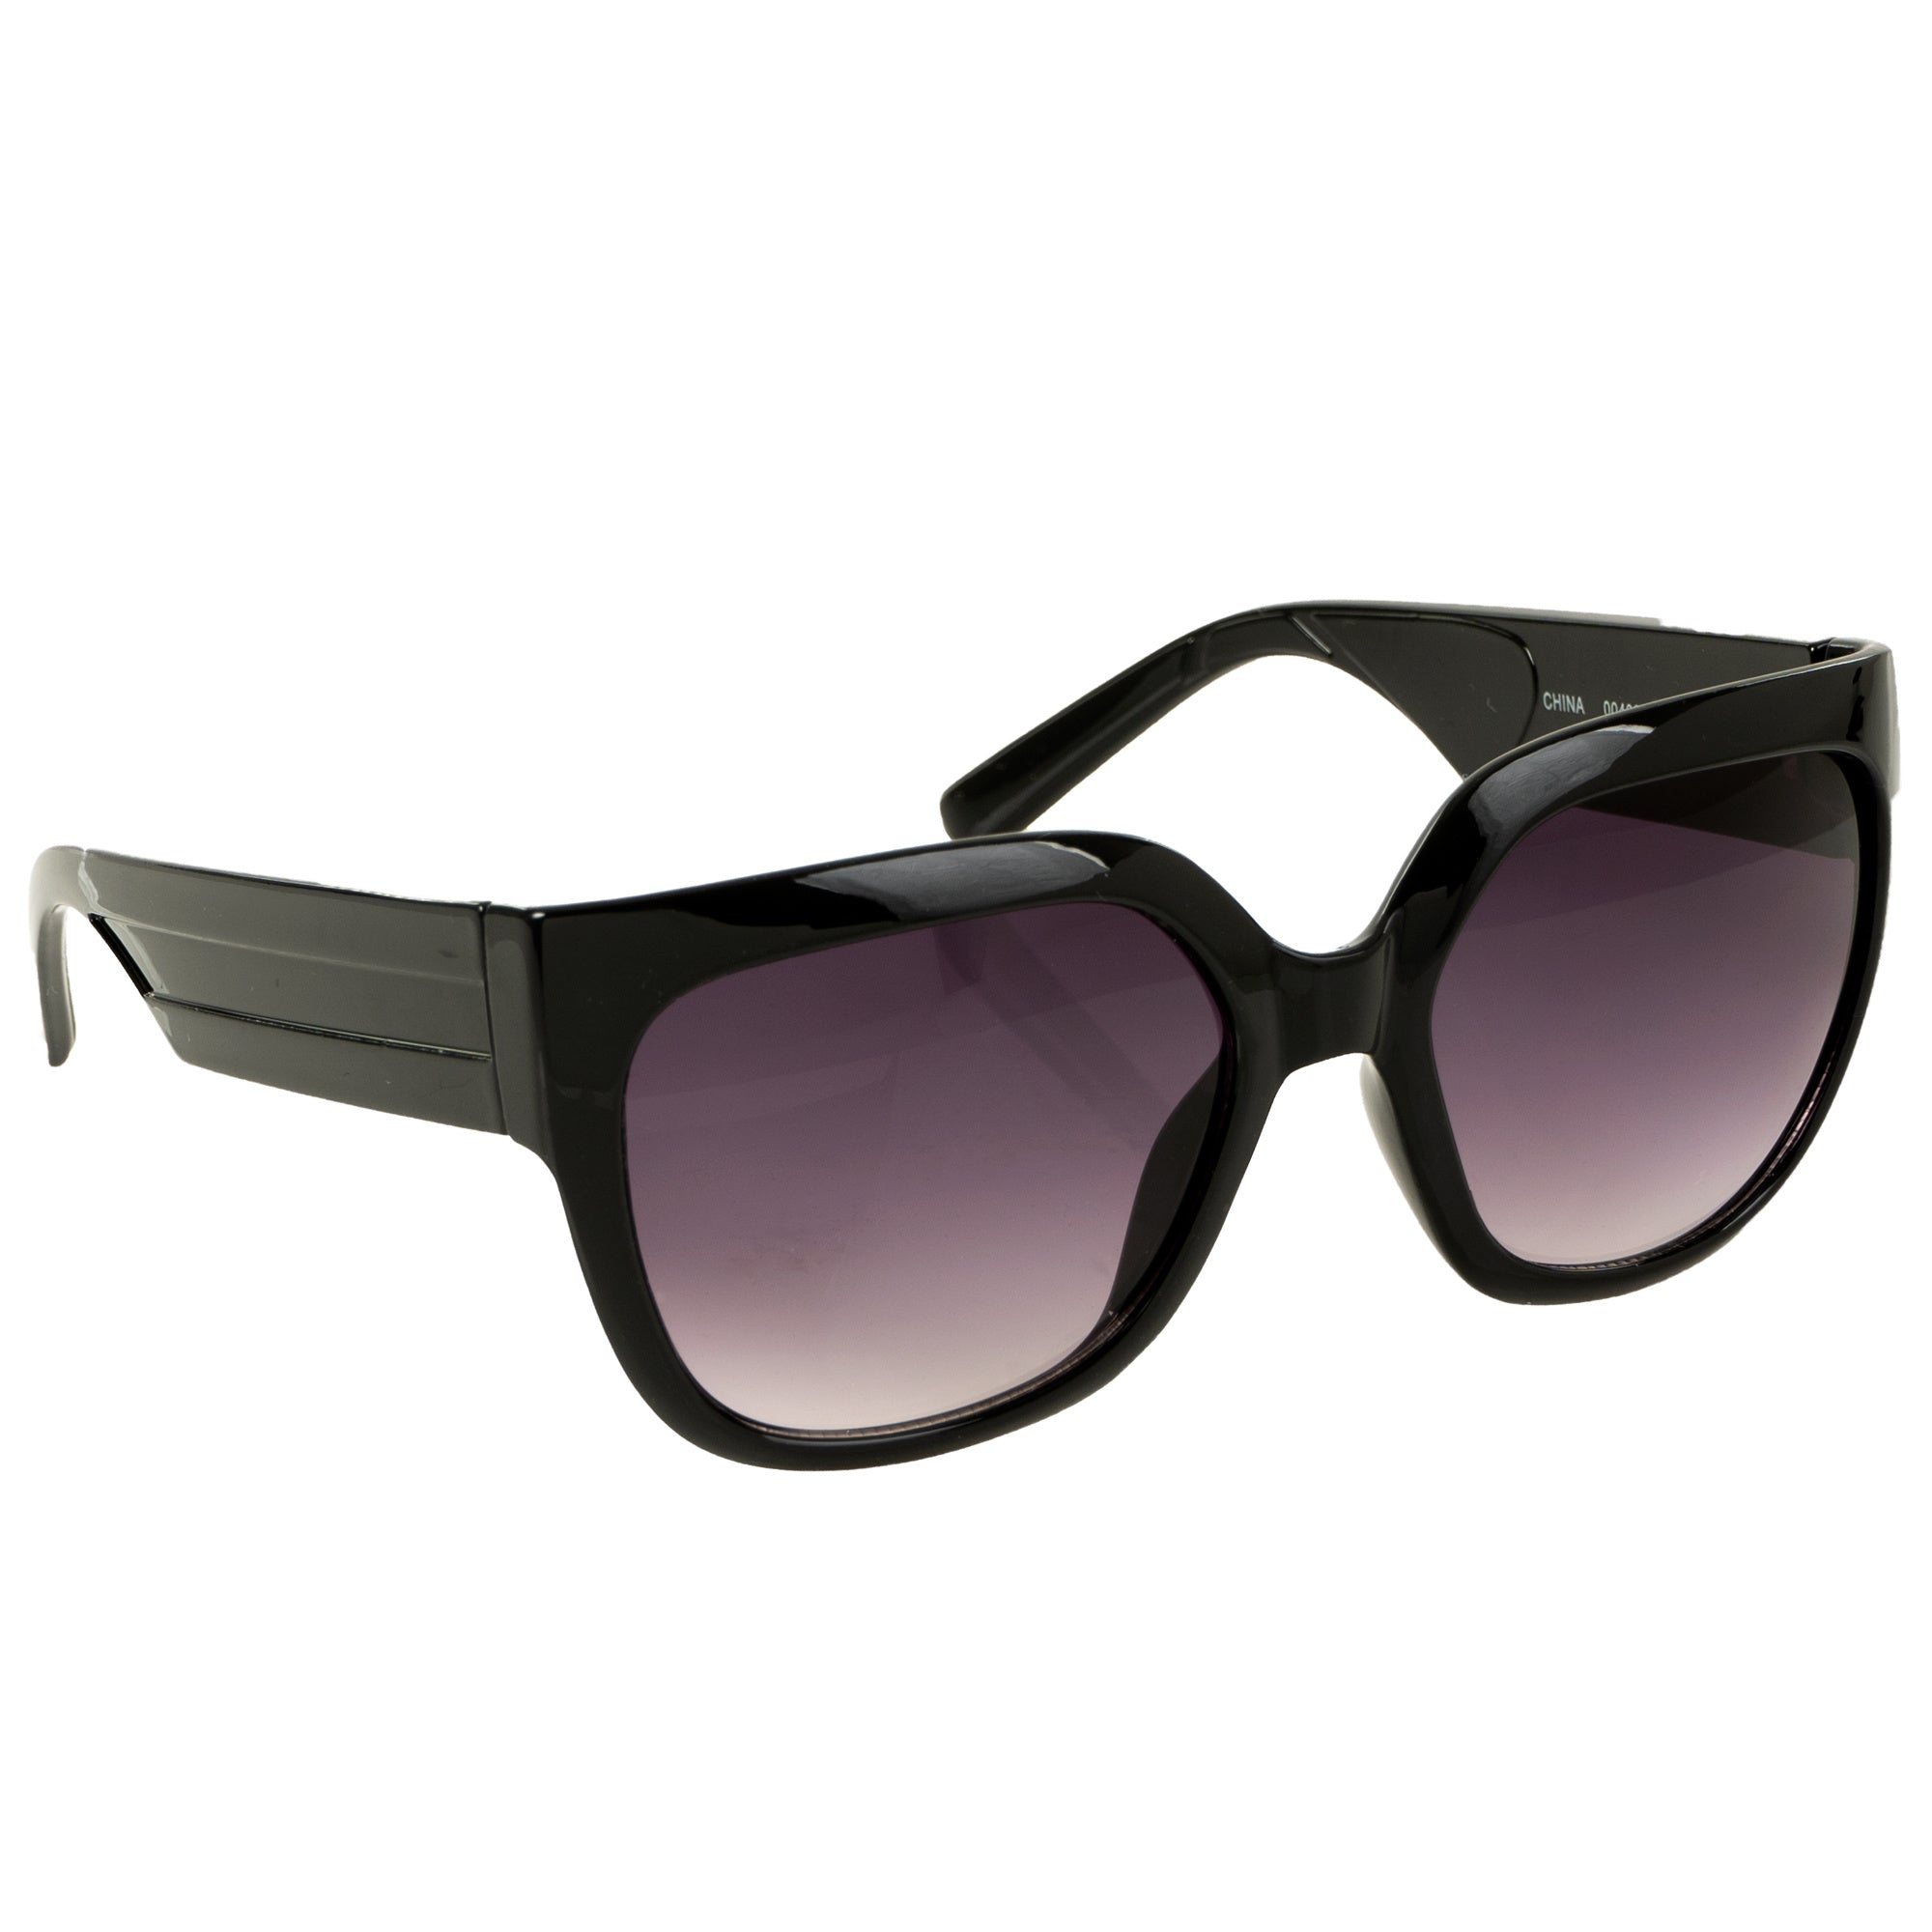 Sunglasses - Super Sleek